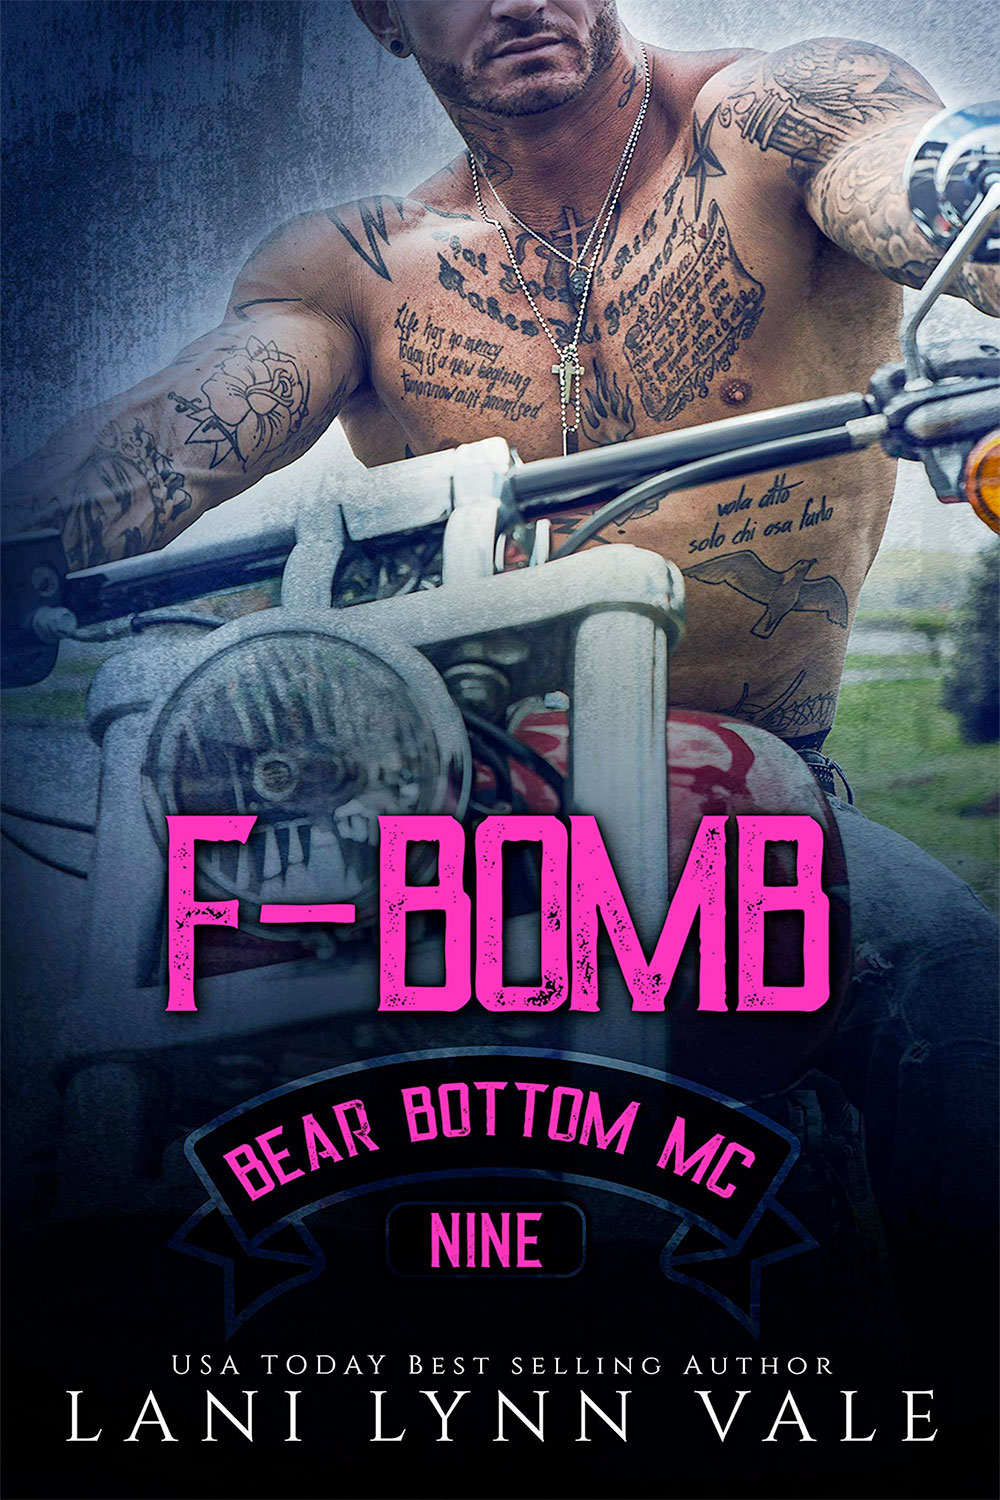 Bear Bottom Guardian MC #9: F-Bomb